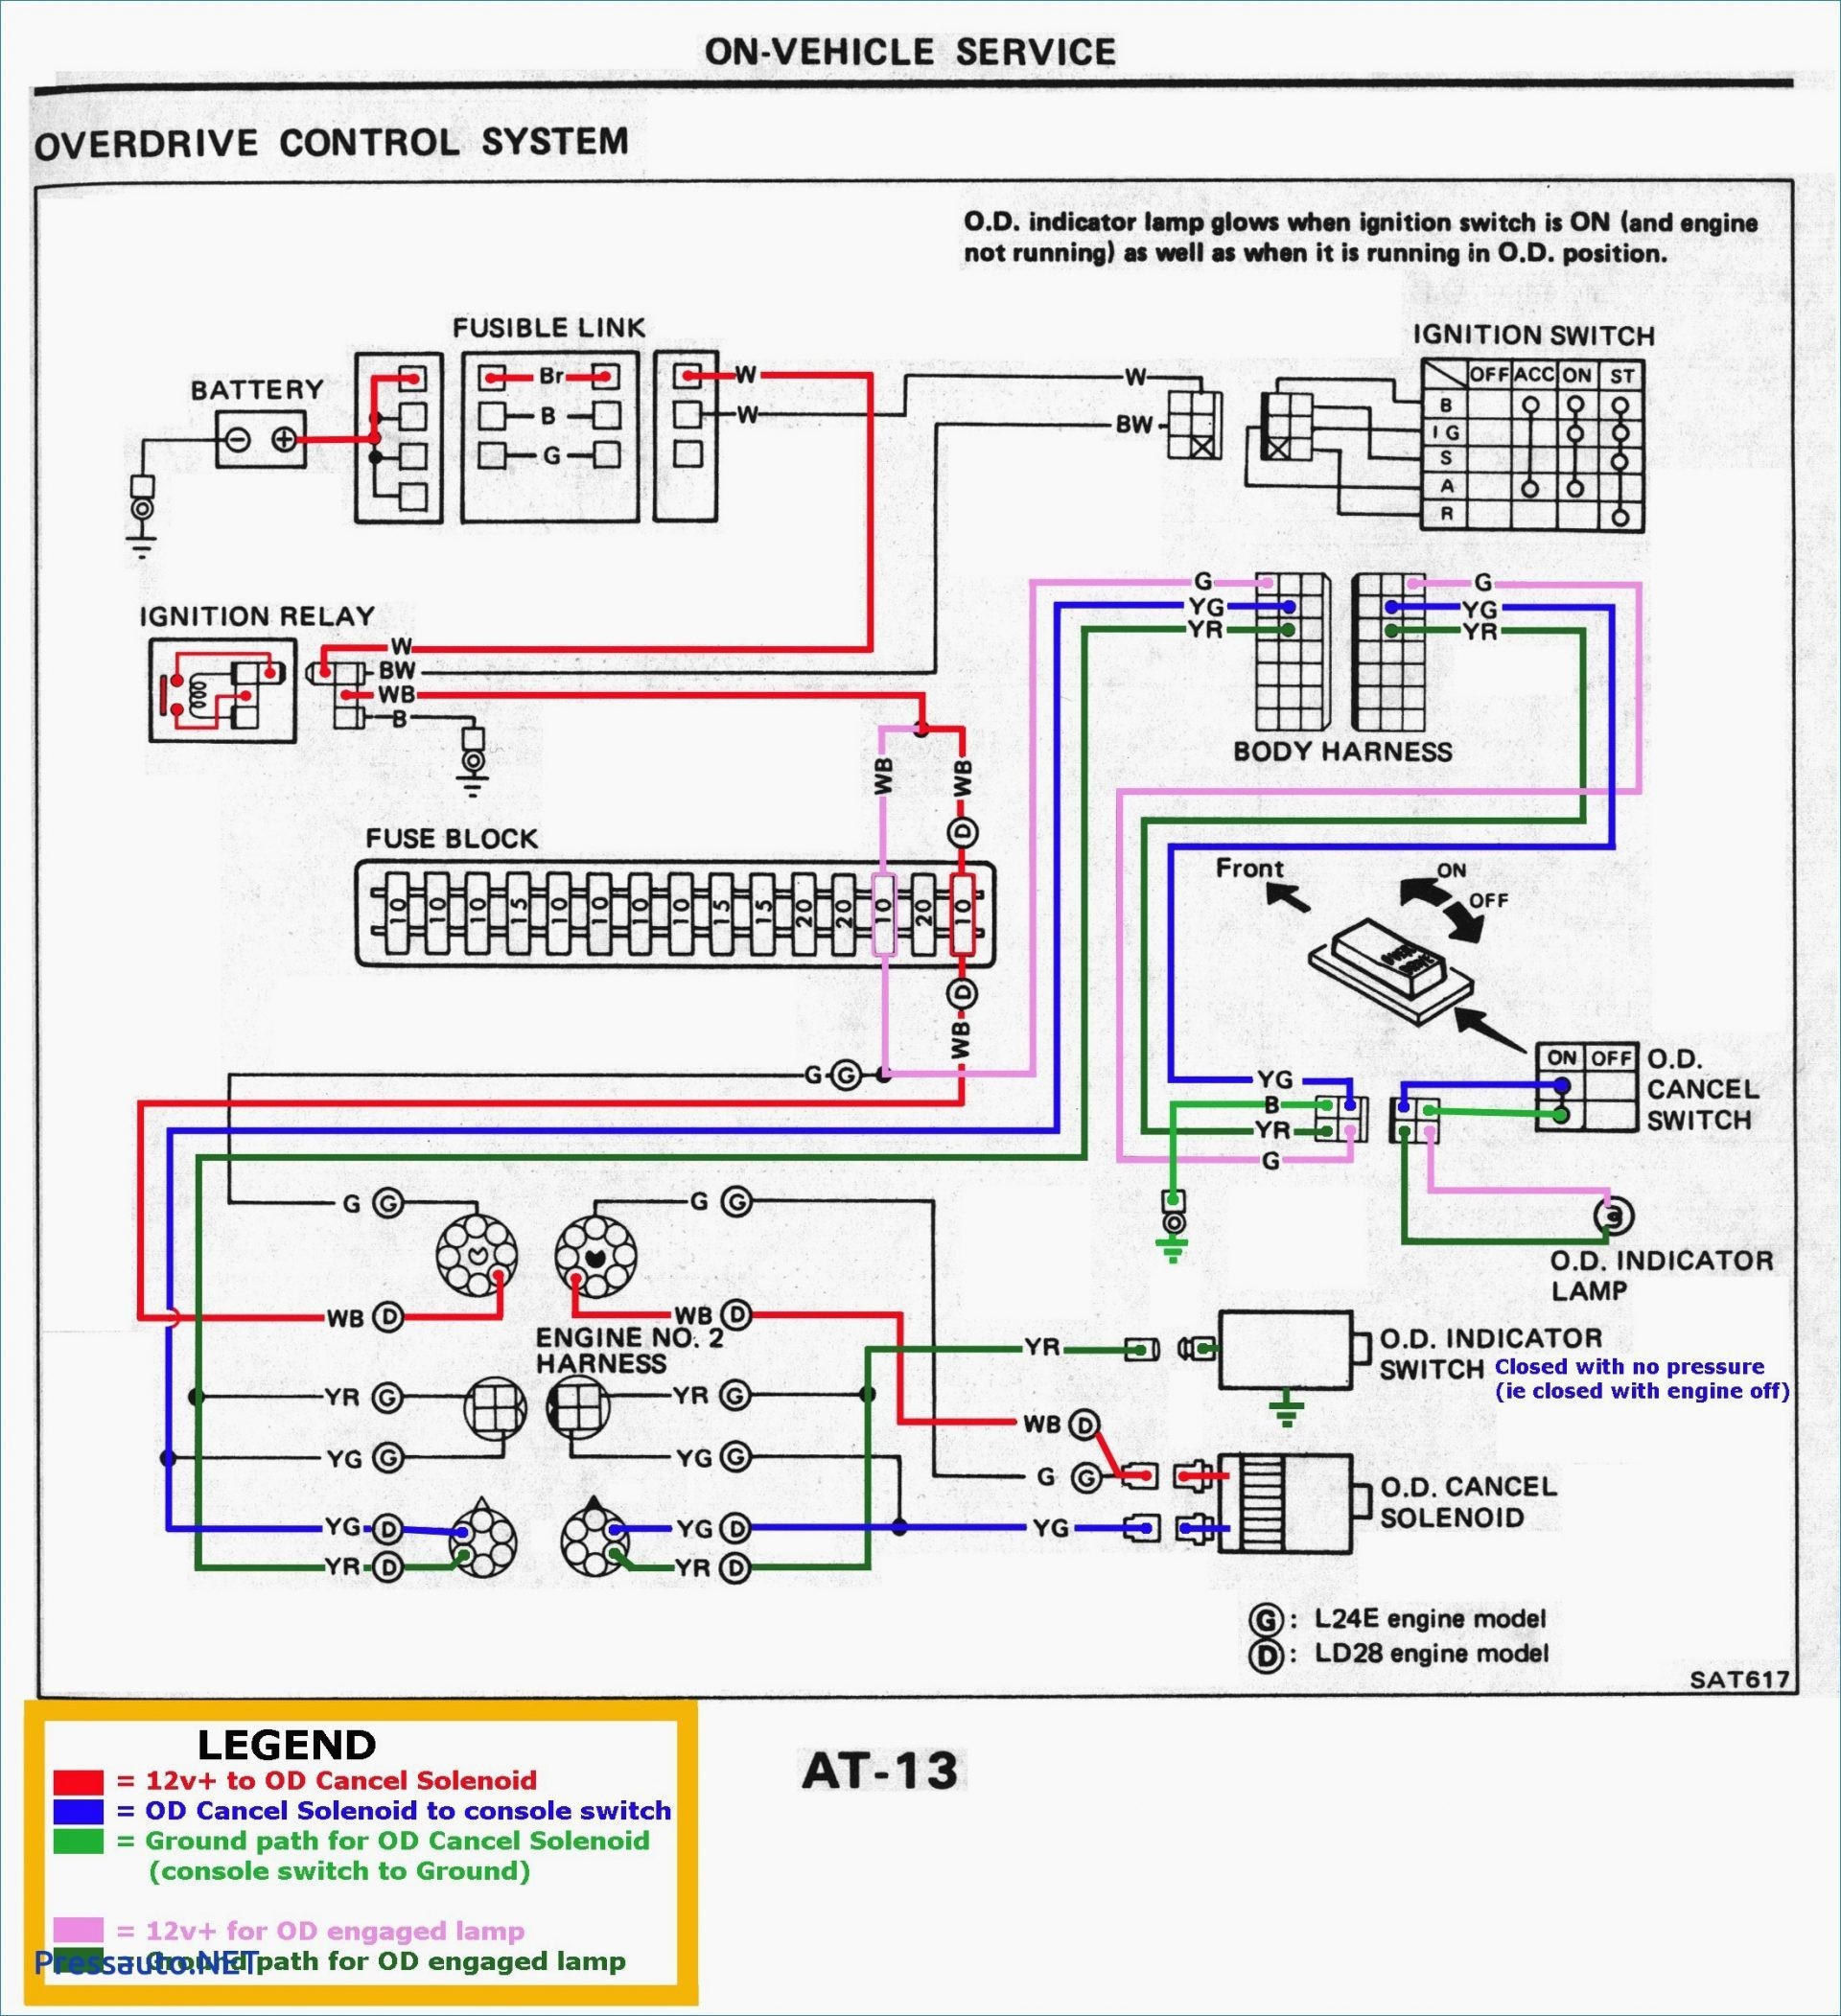 Jump Start Car Circuit Diagram Ignition Interlock Wiring Diagram Of Jump Start Car Circuit Diagram